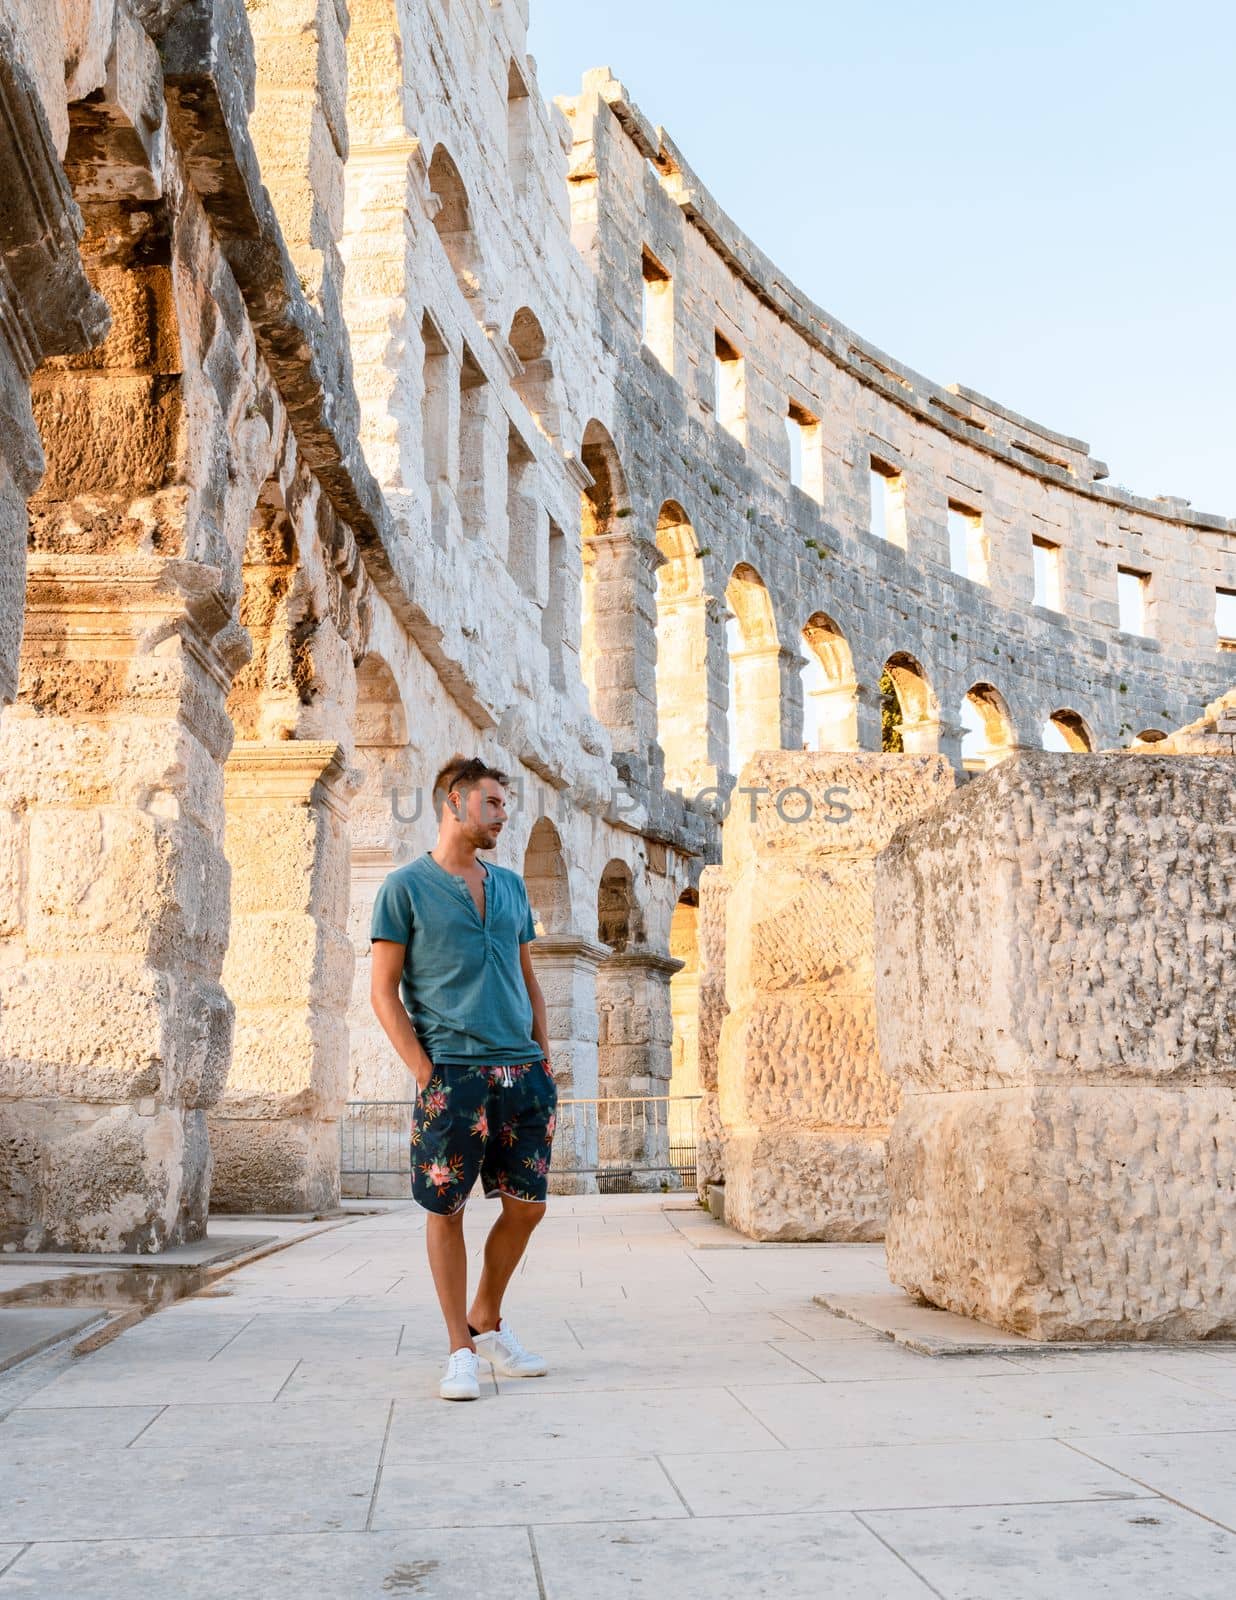 Young men tourist visit Pula city in Croatia, Roman amphi theatre Arena in Pula  by fokkebok